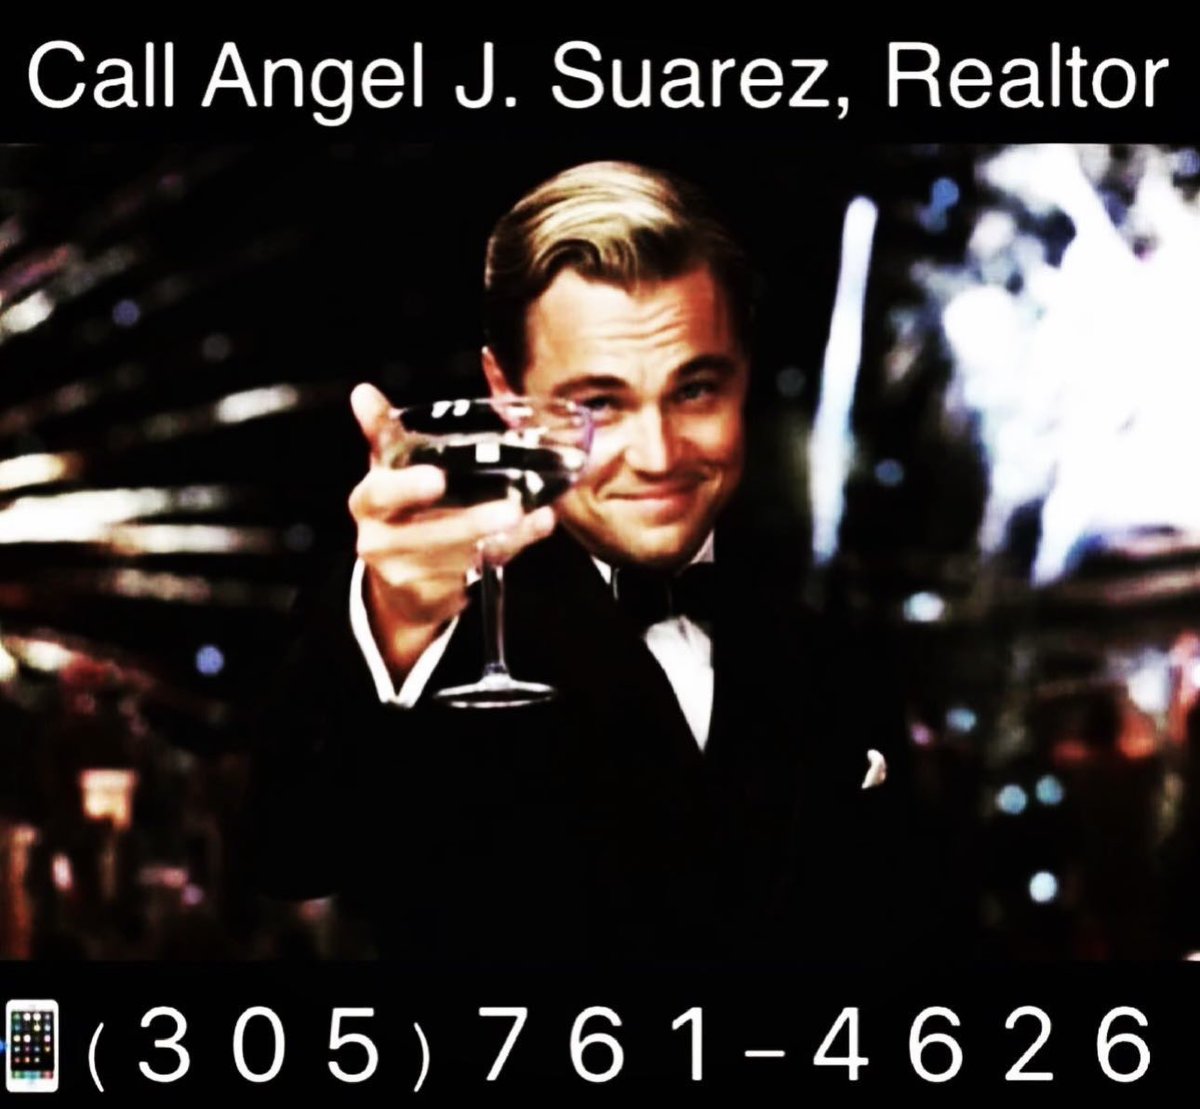 Angel J. Suarez
Real Estate Agent 
United Real Estate Advisors
Mobile: (305) 761-4626
Email: ourmiamirealtor@gmail.com
Social Media: #ourmiamirealtor
.
.
.
.
.
.
.
.
.
.
.
.
.
.
.
.
.
.
.
.

#ourmiamirealtor #realtor #miamirealtor #miami #miamirealestate #florida #luxurylisting